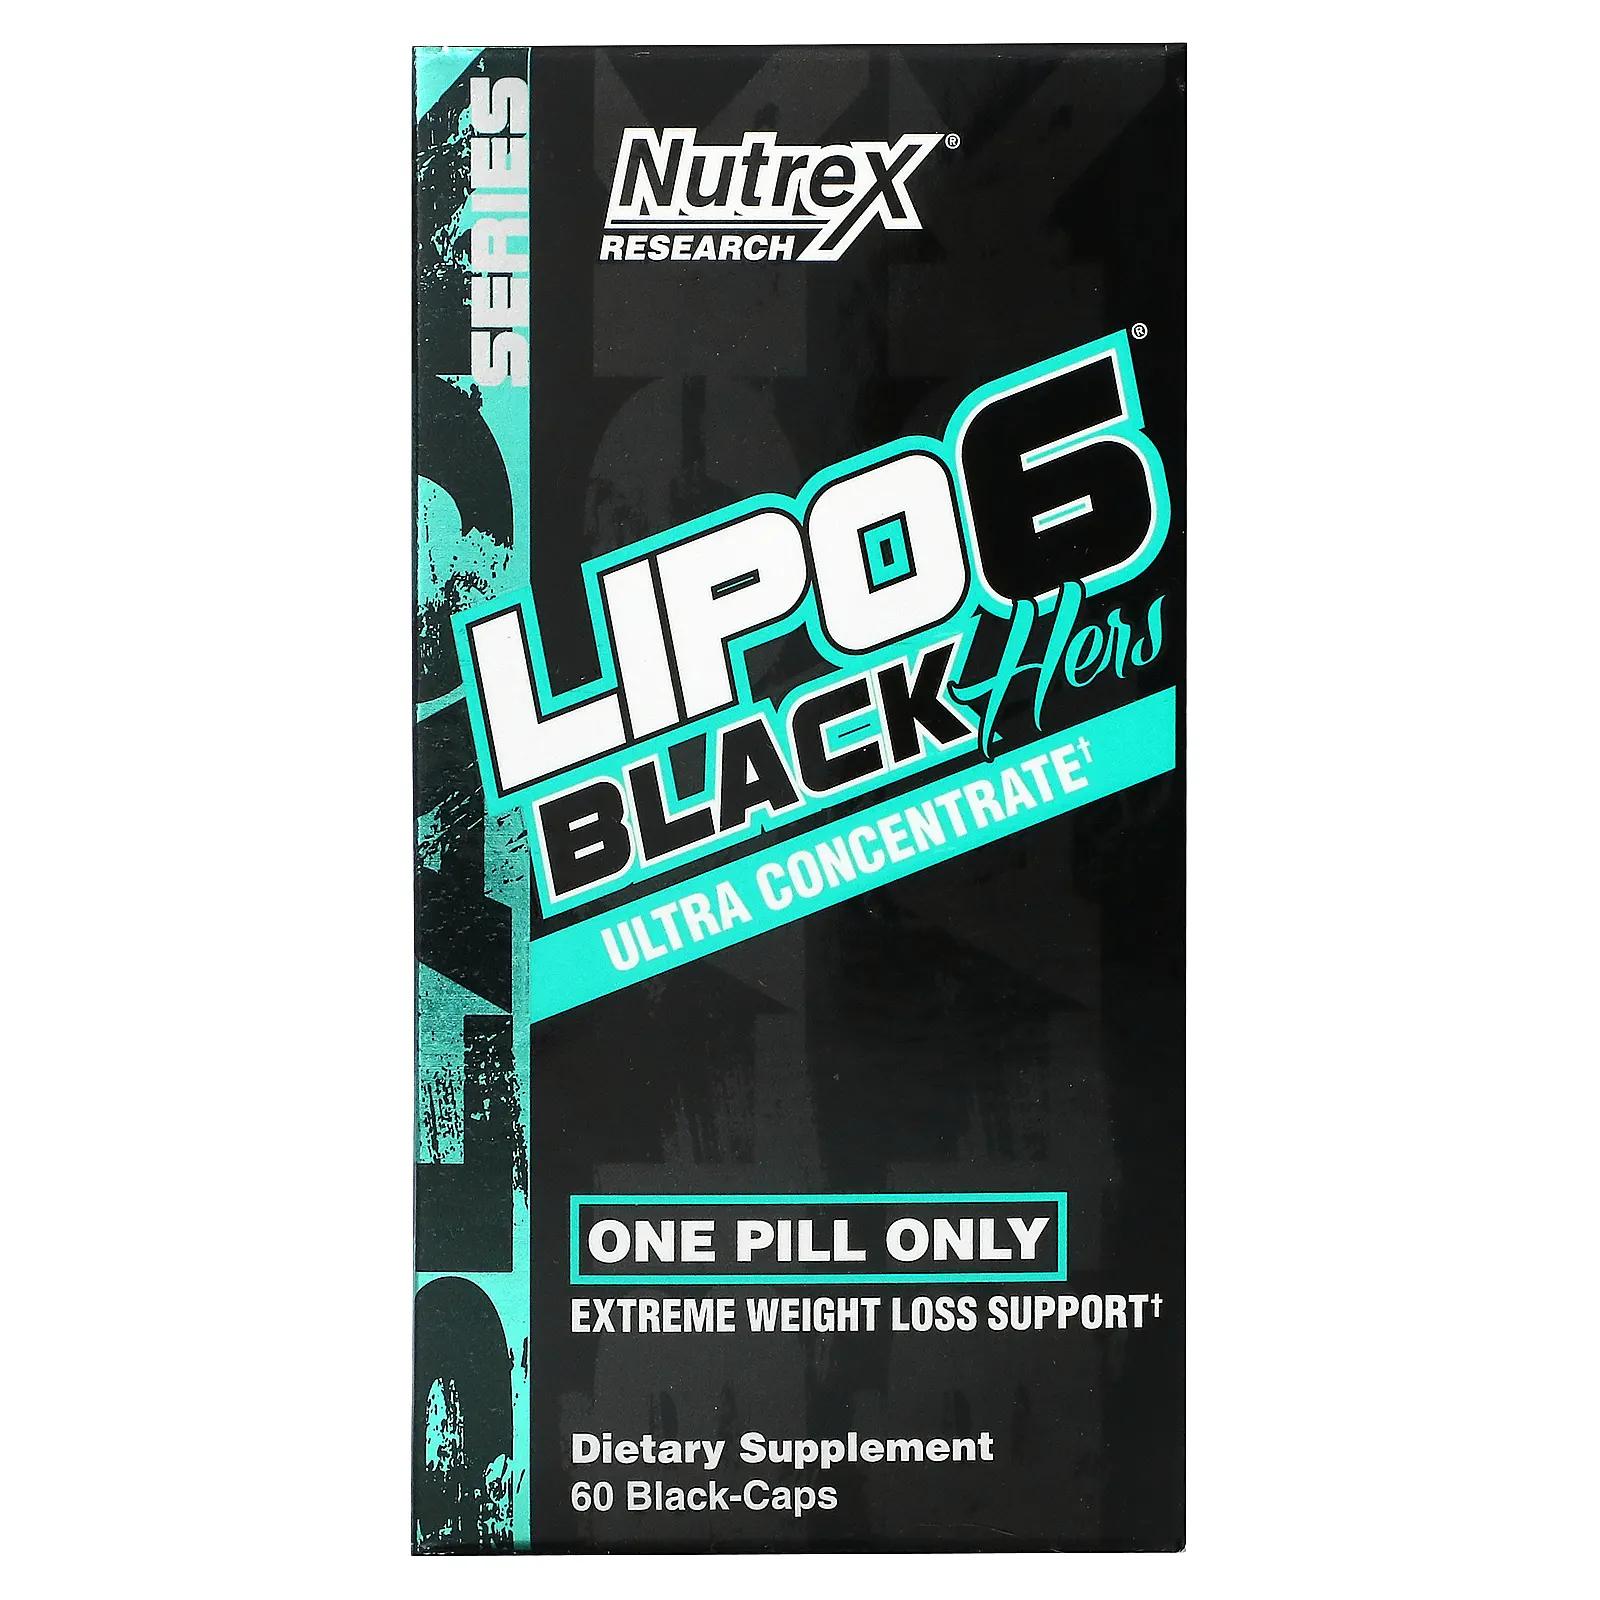 Nutrex Research Lipo-6 Black Hers ультраконцентрированный 60 черных капсул